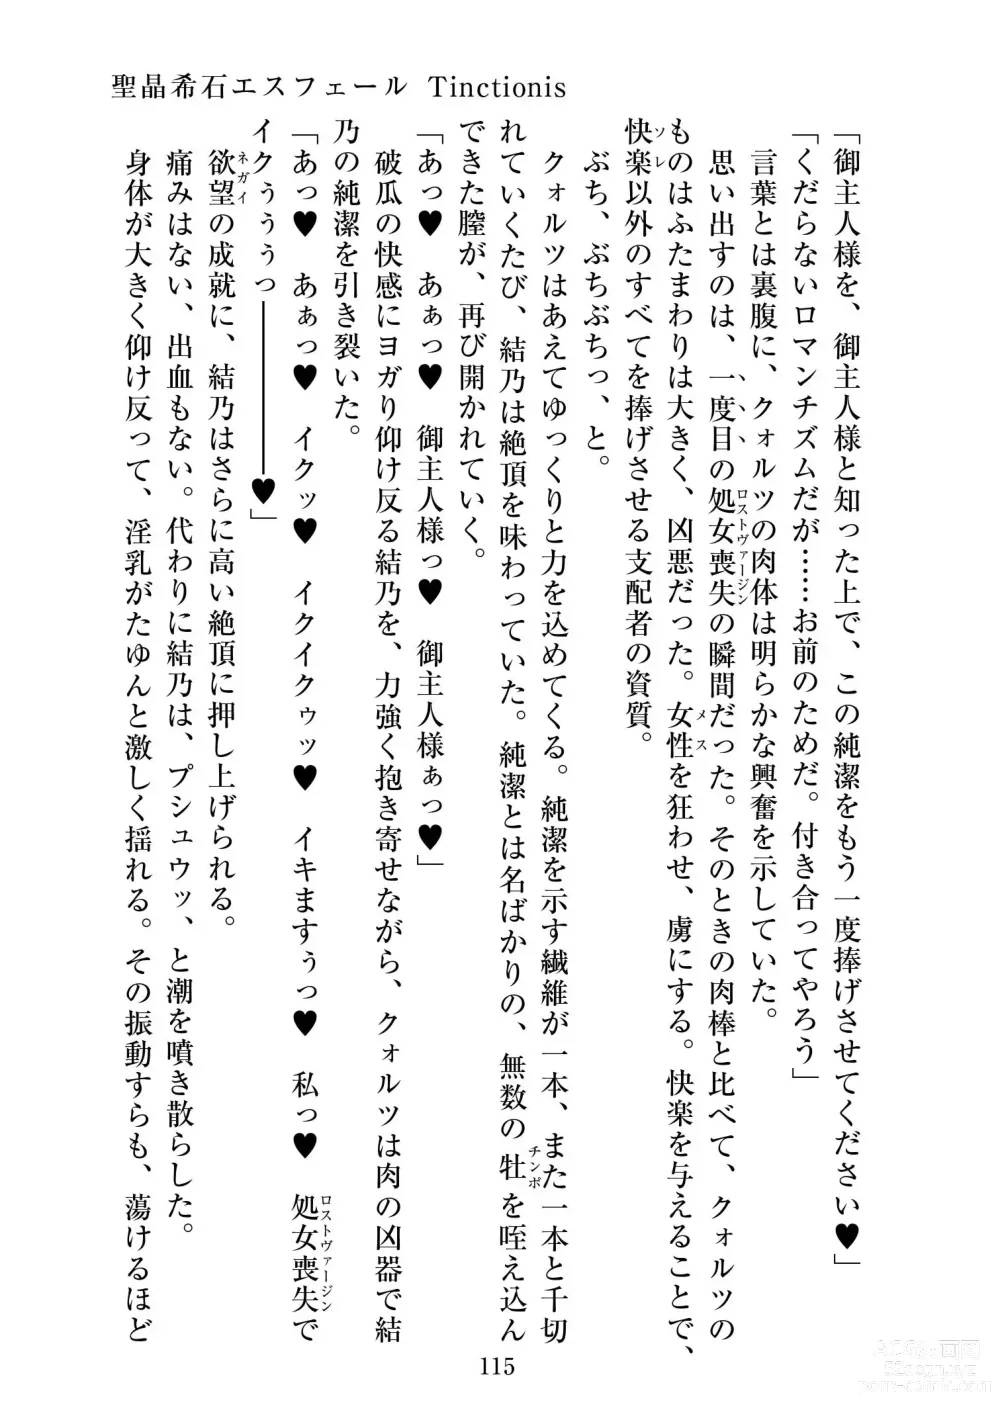 Page 116 of doujinshi Holy Crystal Esphére Tinctionis